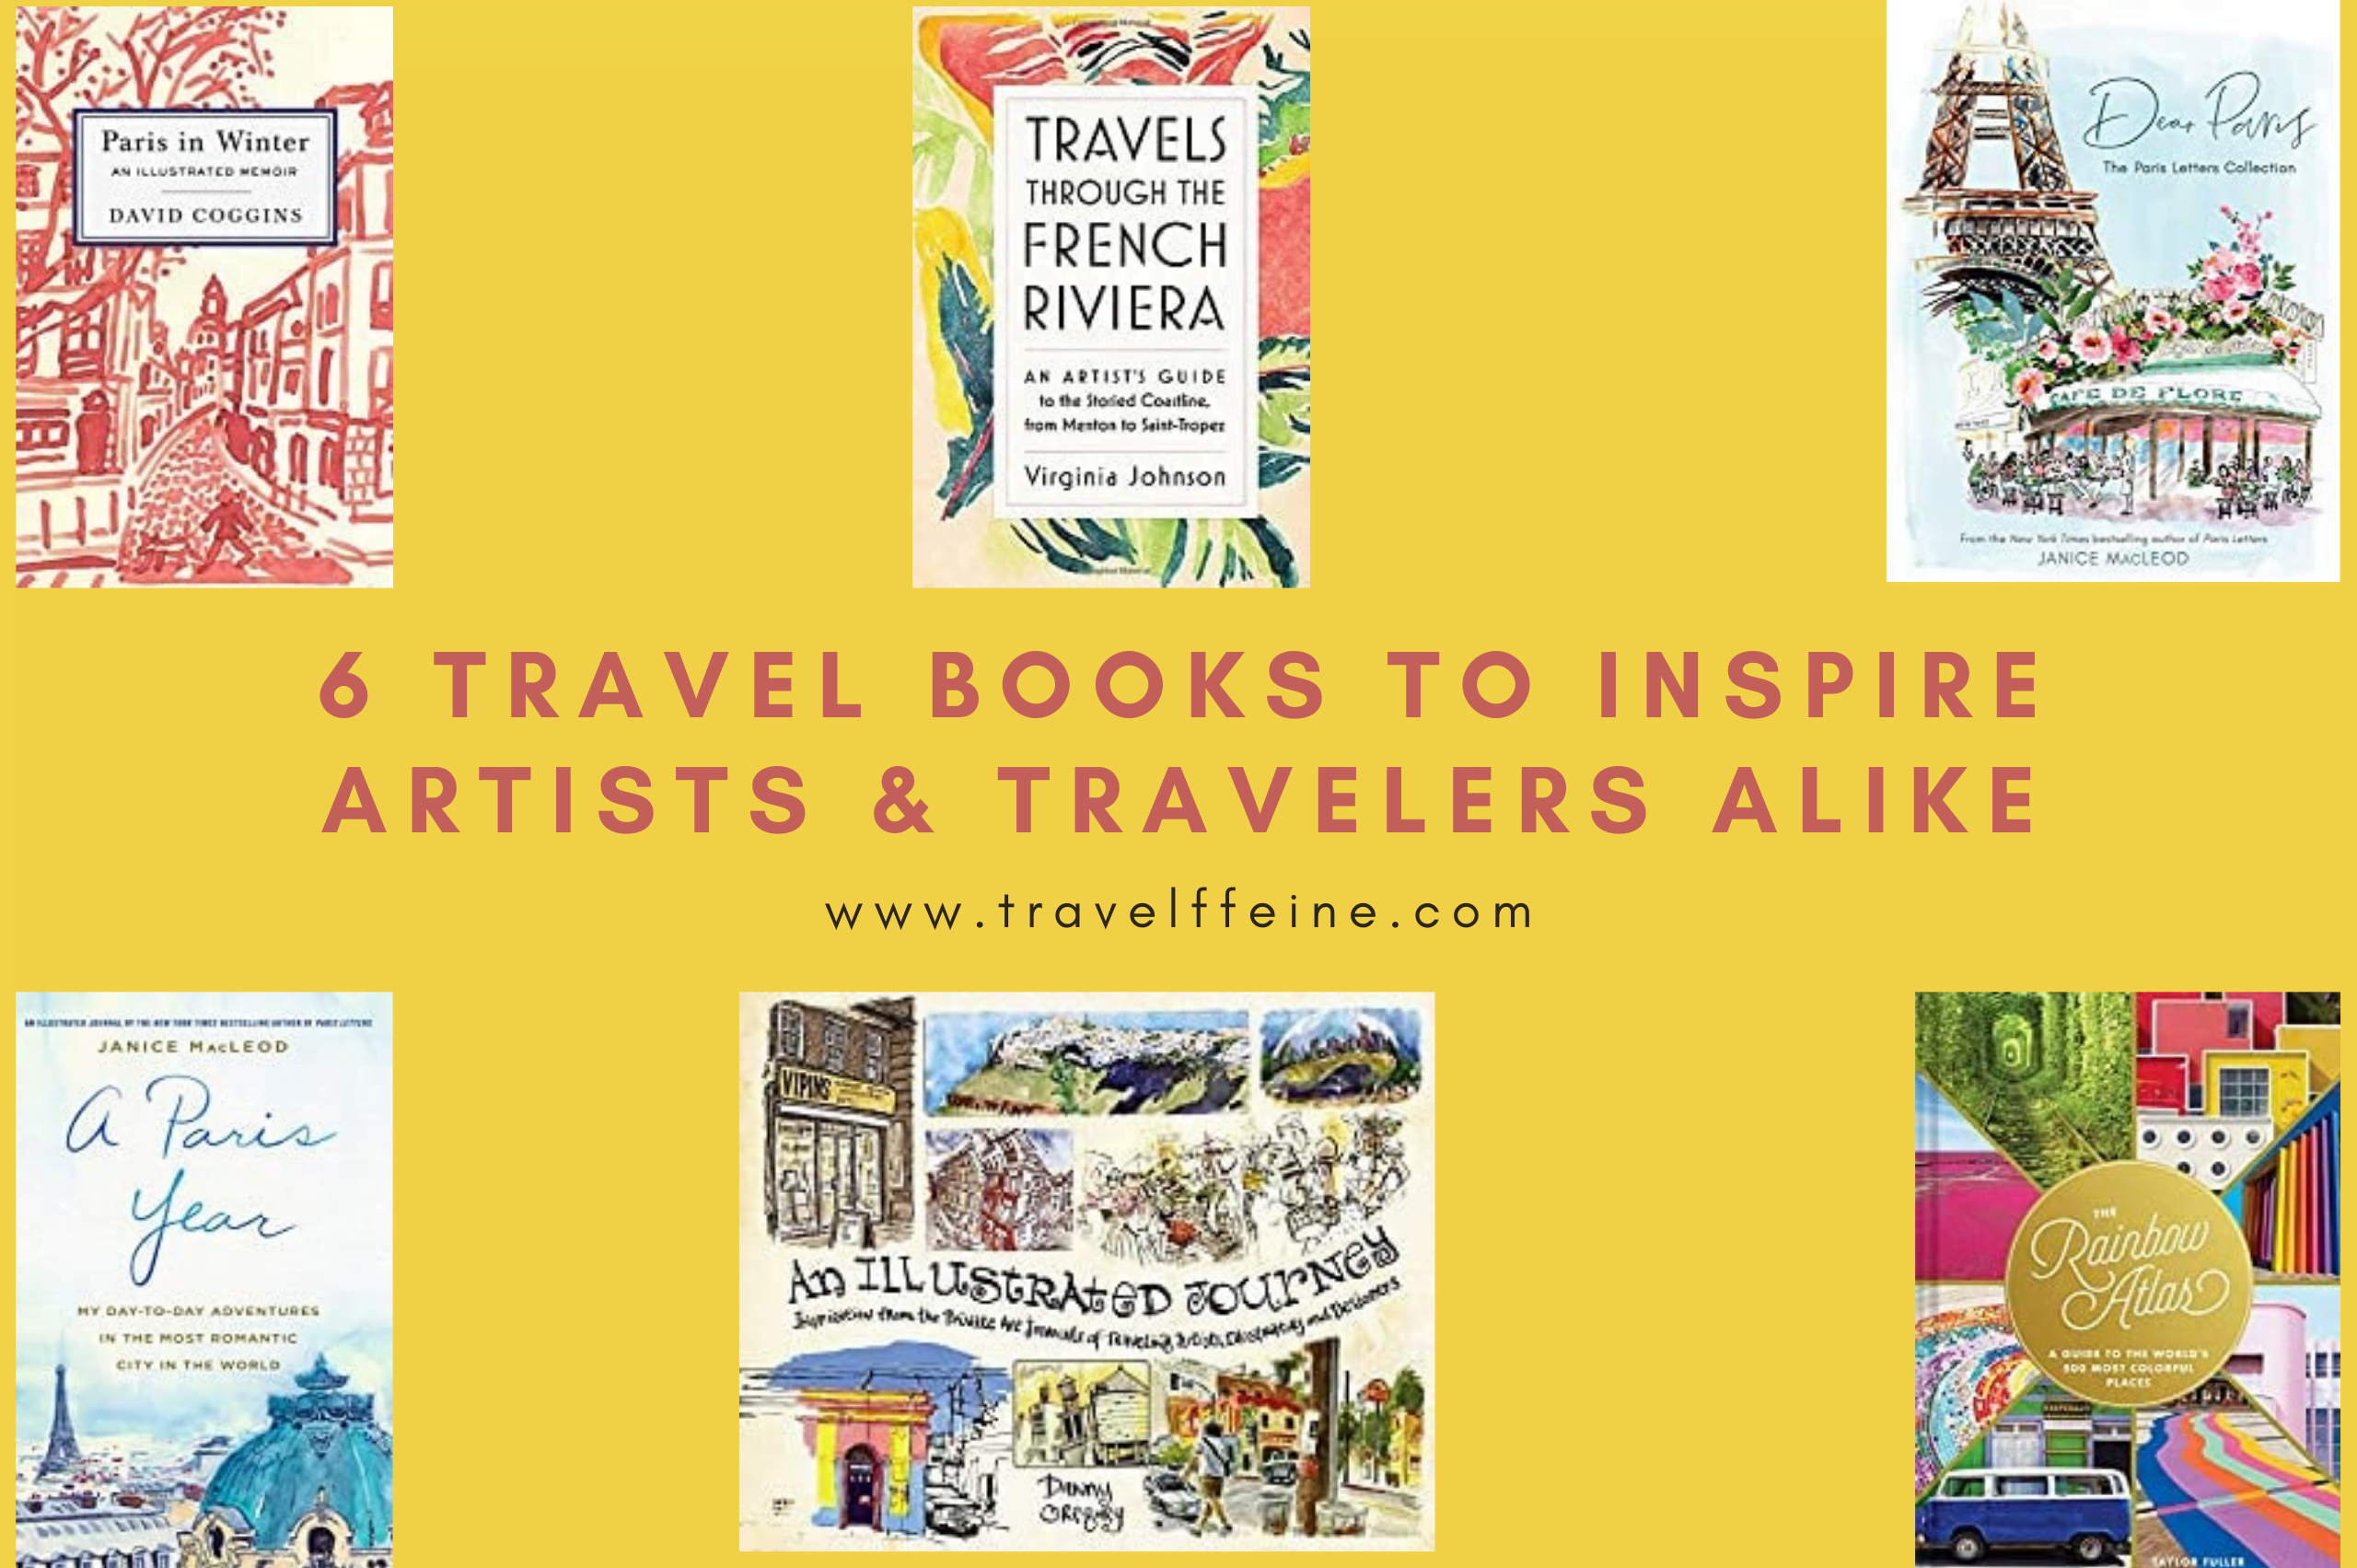 https://www.travelffeine.com/wp-content/uploads/2021/09/6-Travel-Books-to-Inspire-Travelers-Artists-Alike.png